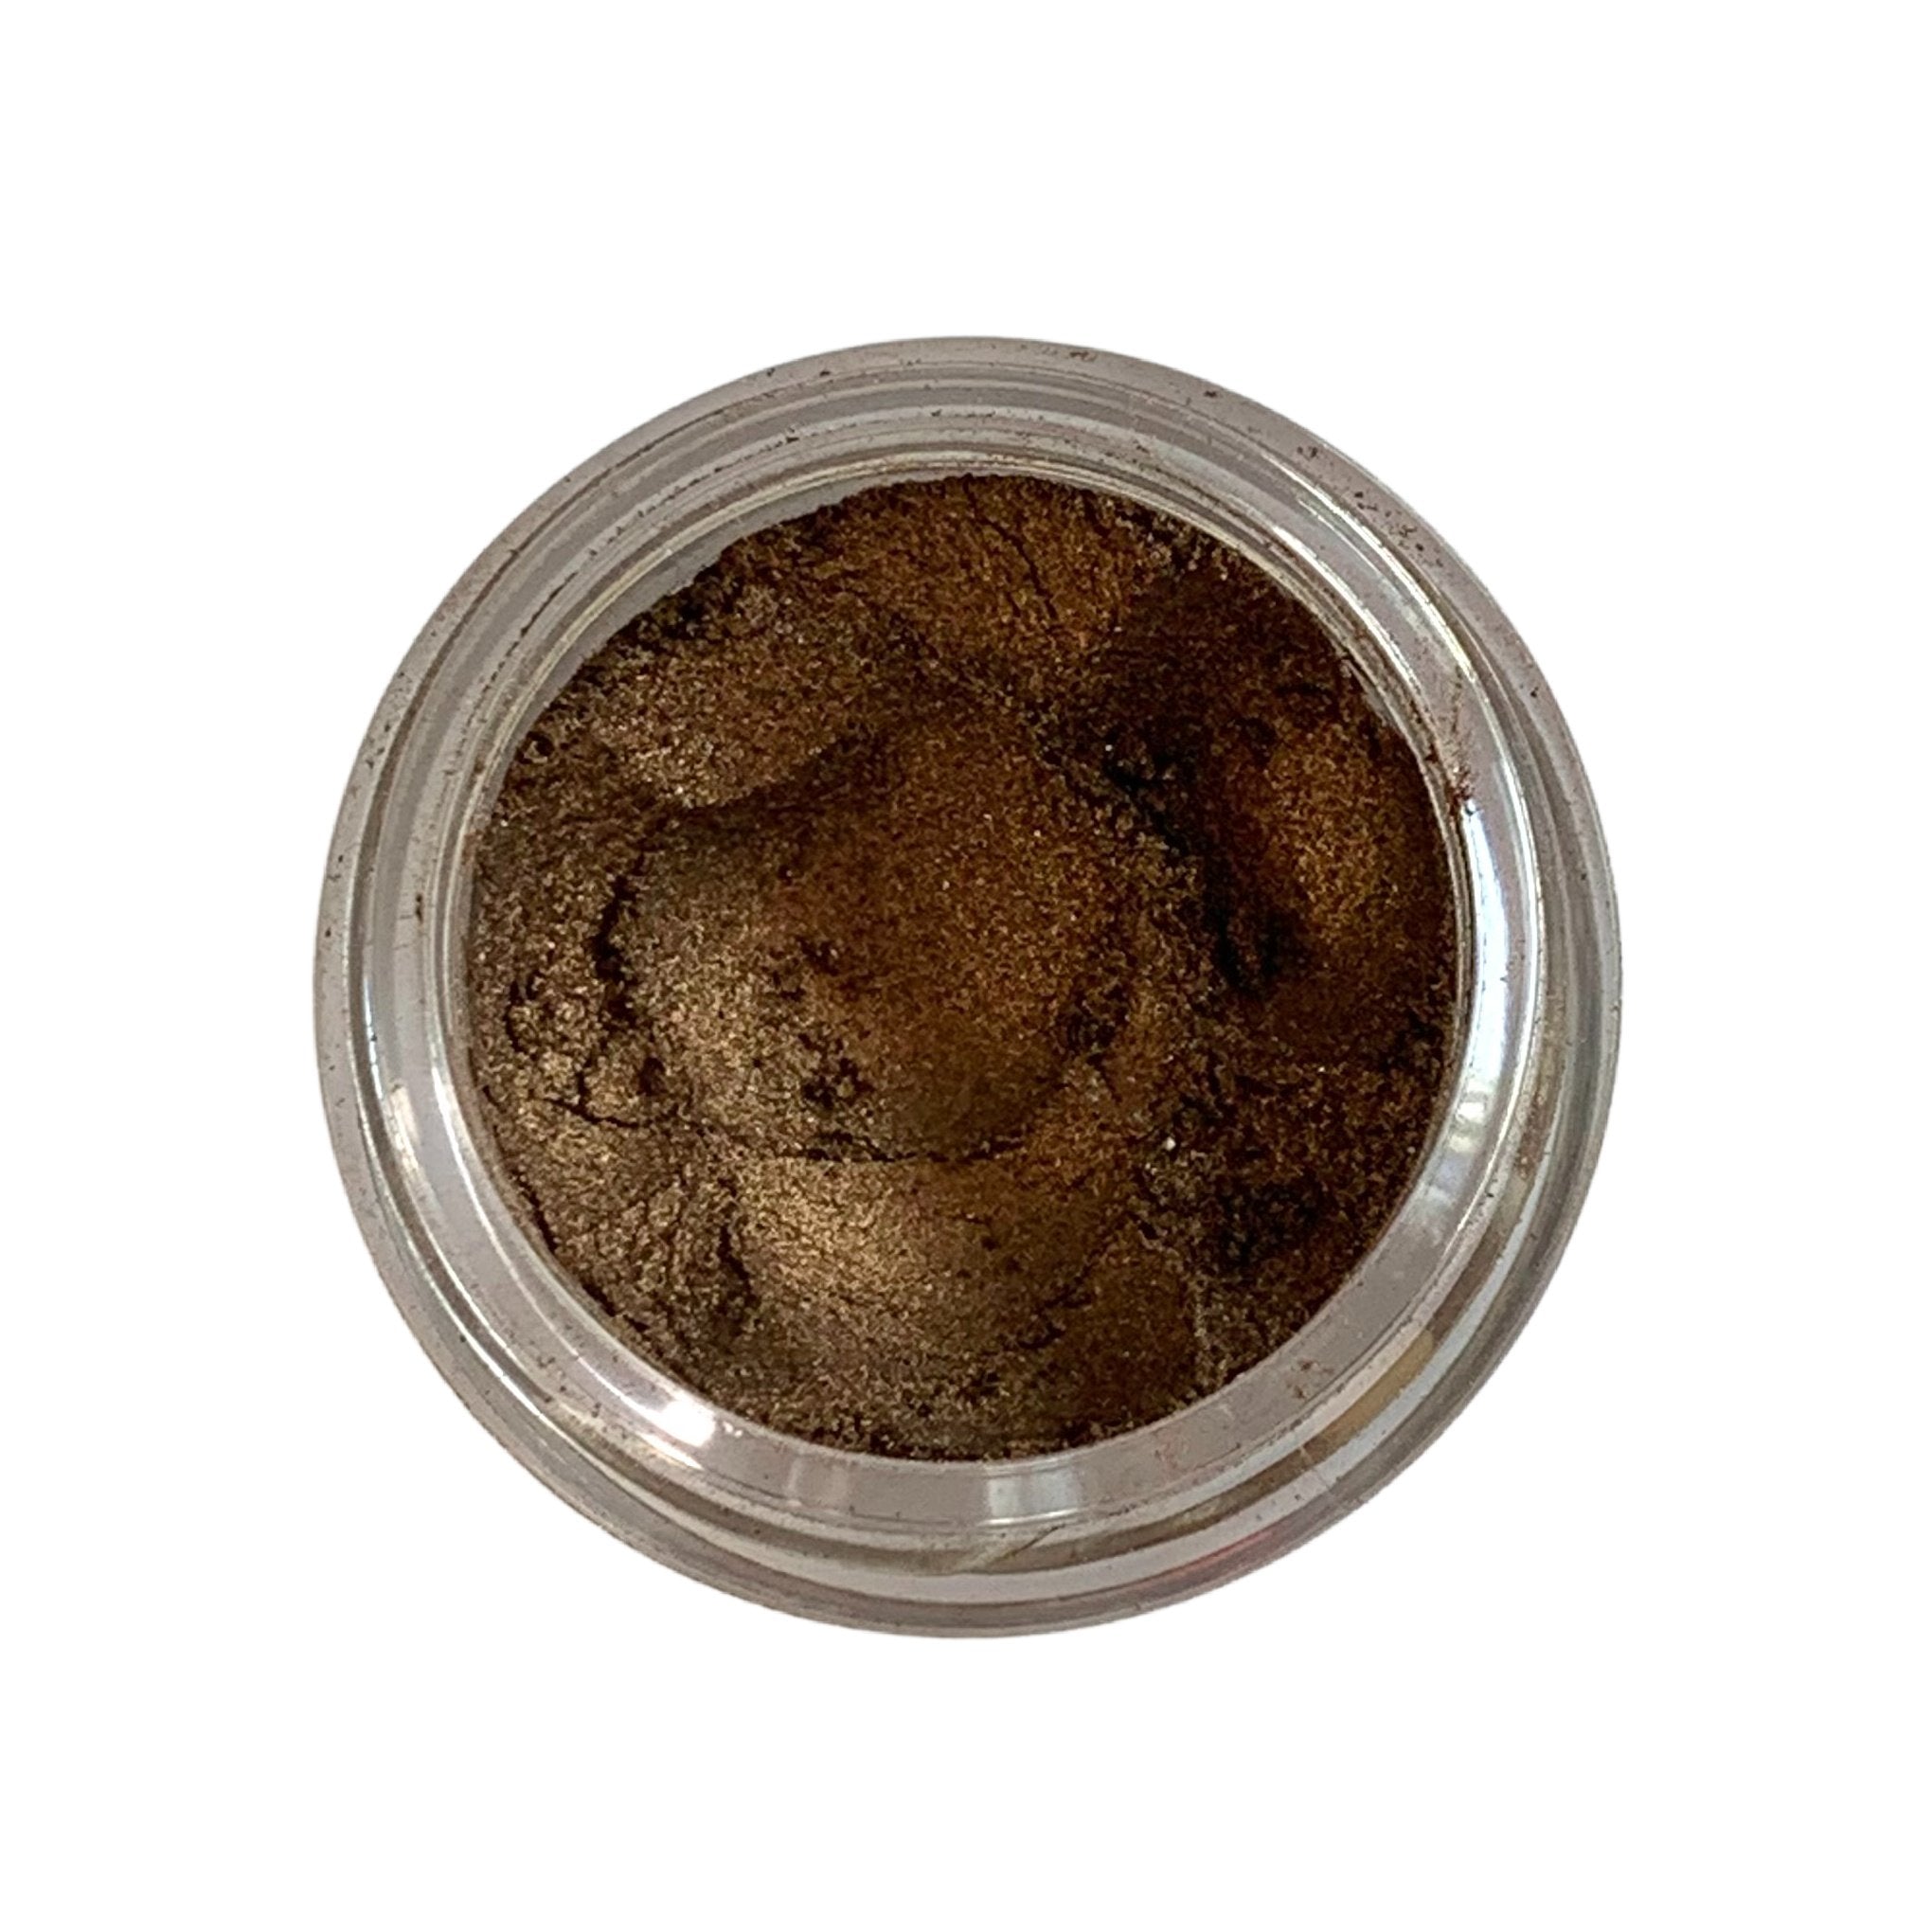 umber - coppery brown loose mineral eyeshadow. 10gram sifter jar. vegan and cruelty free.